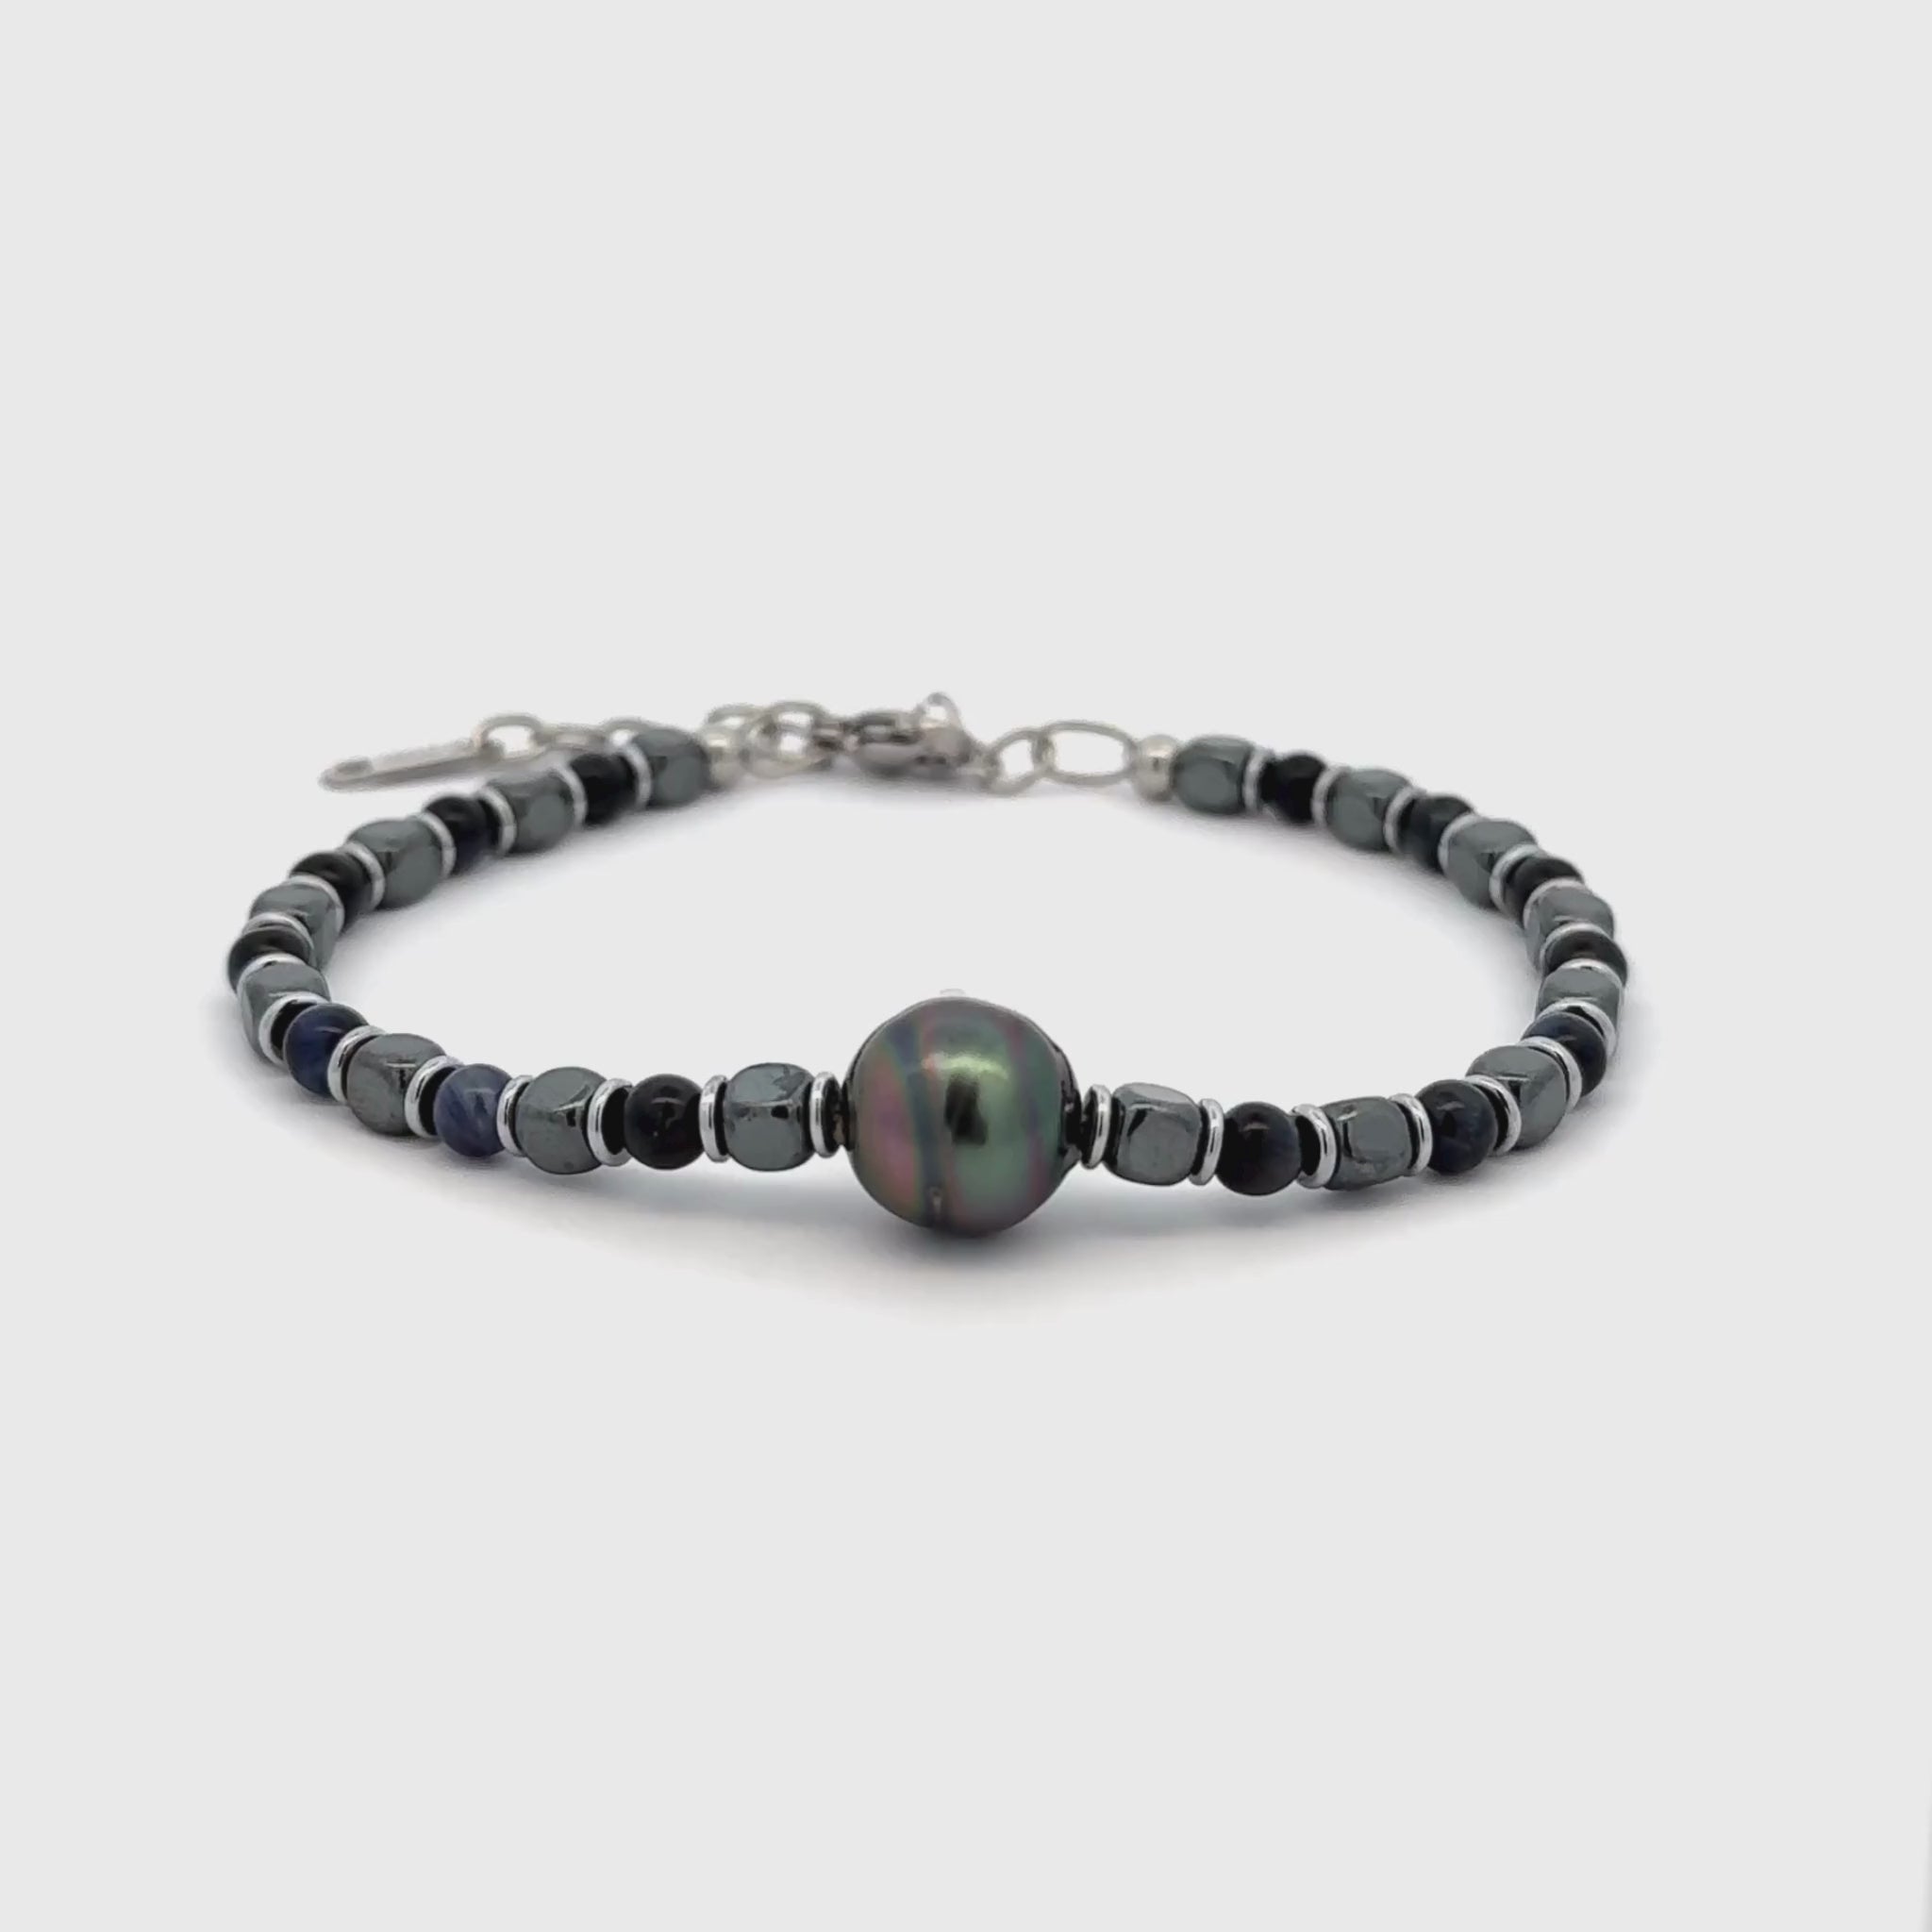 Tahitian Pearl and Silver/Black/Grey Hematite Natural Stone Variable Length Bracelet